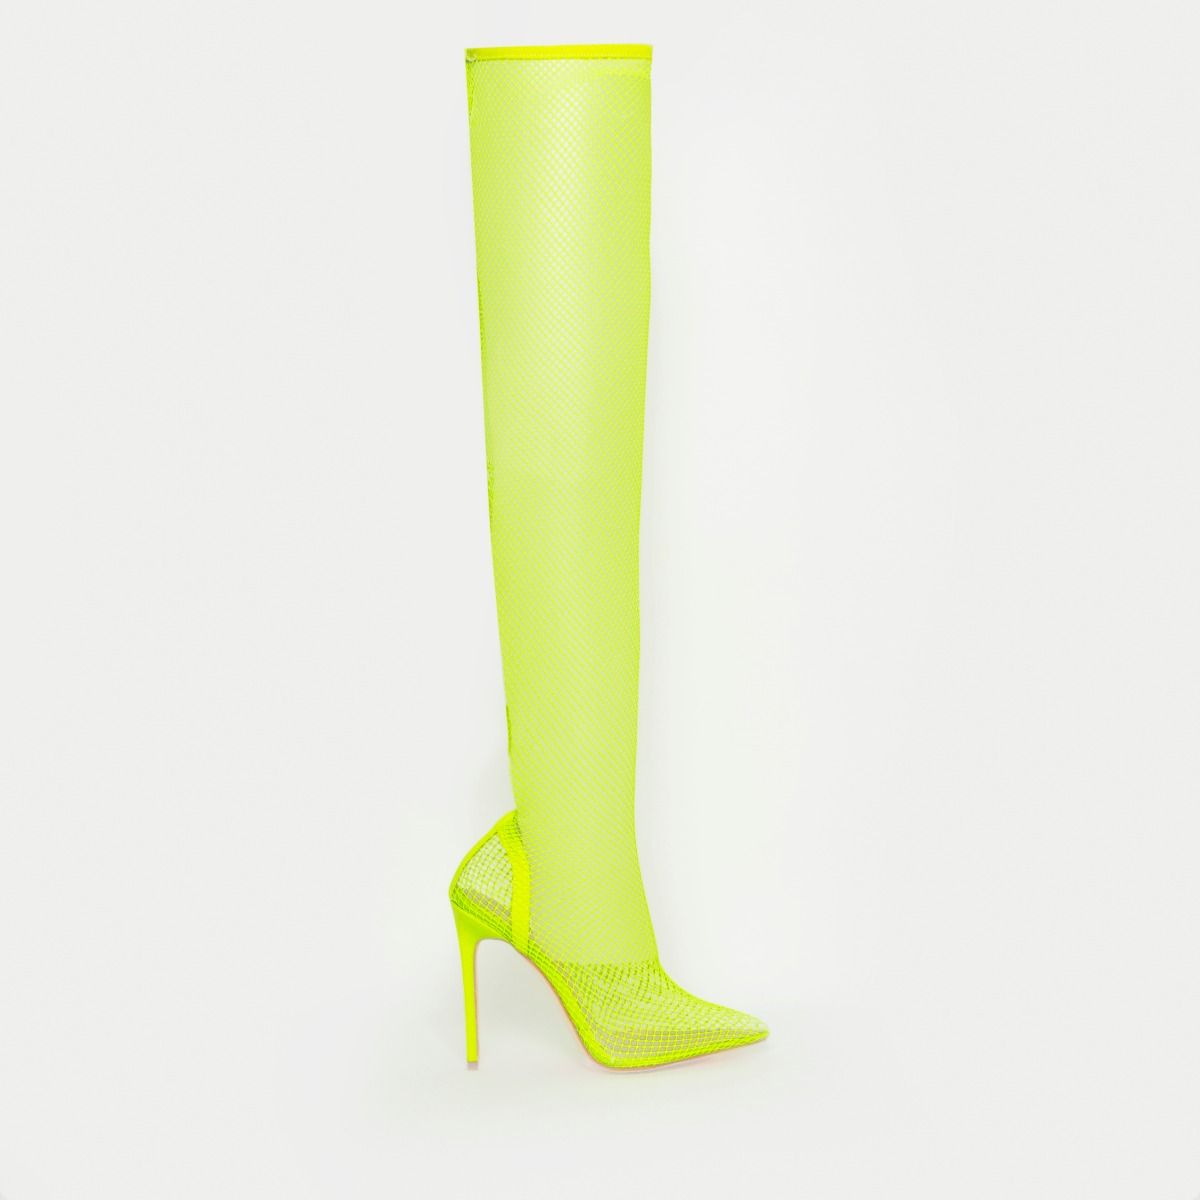 neon green thigh high boots